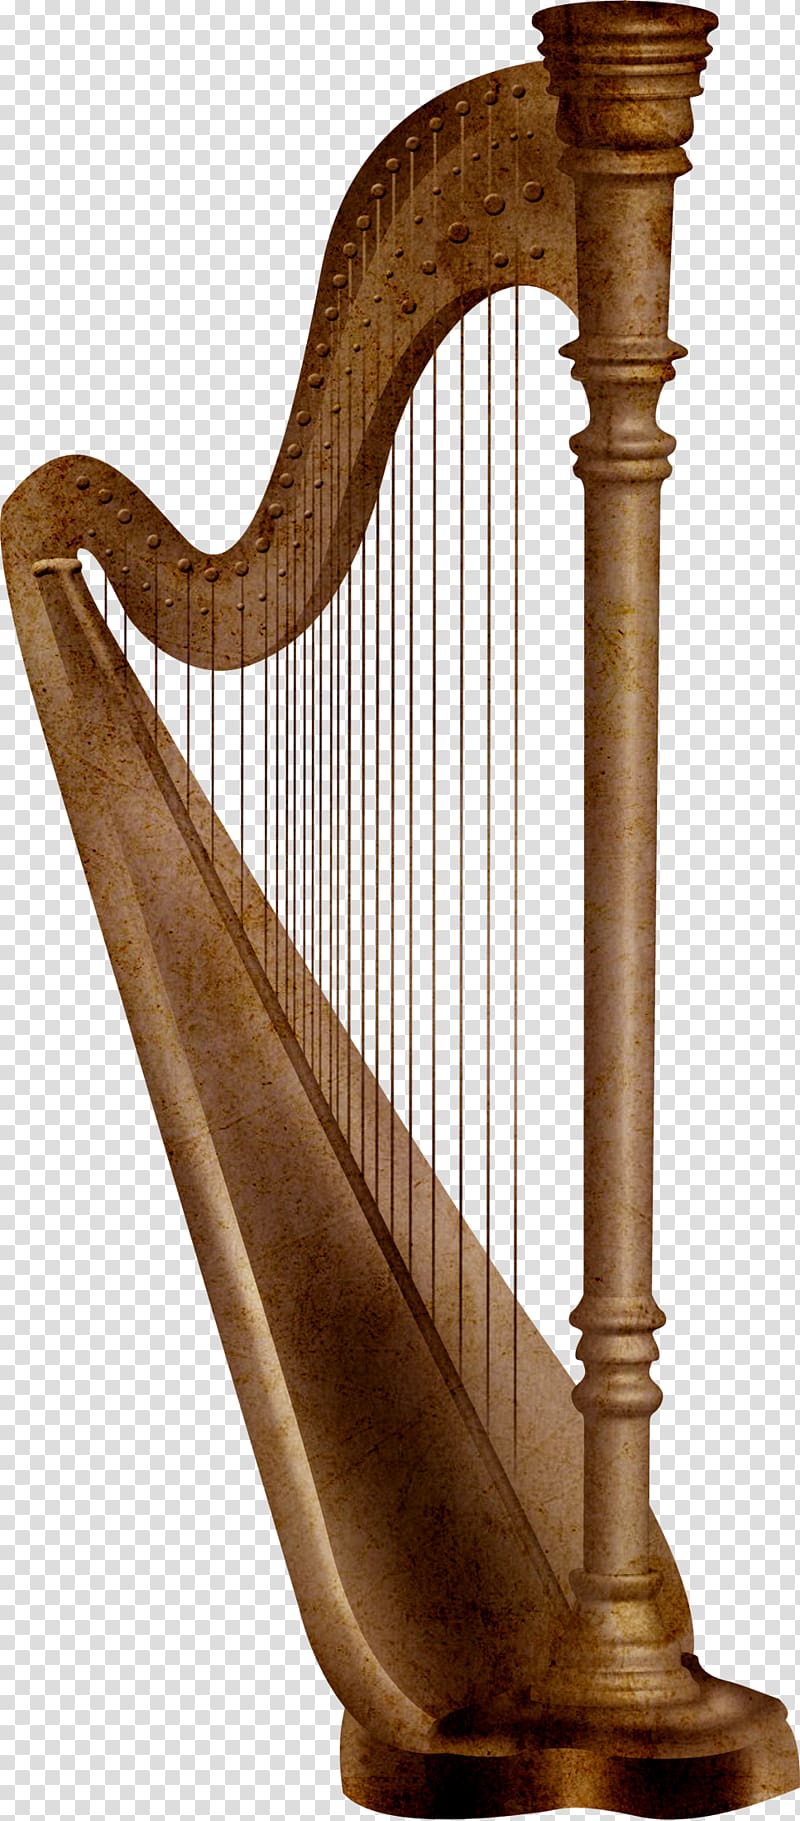 Celtic harp Musical instrument, Harp decorative pattern transparent background PNG clipart